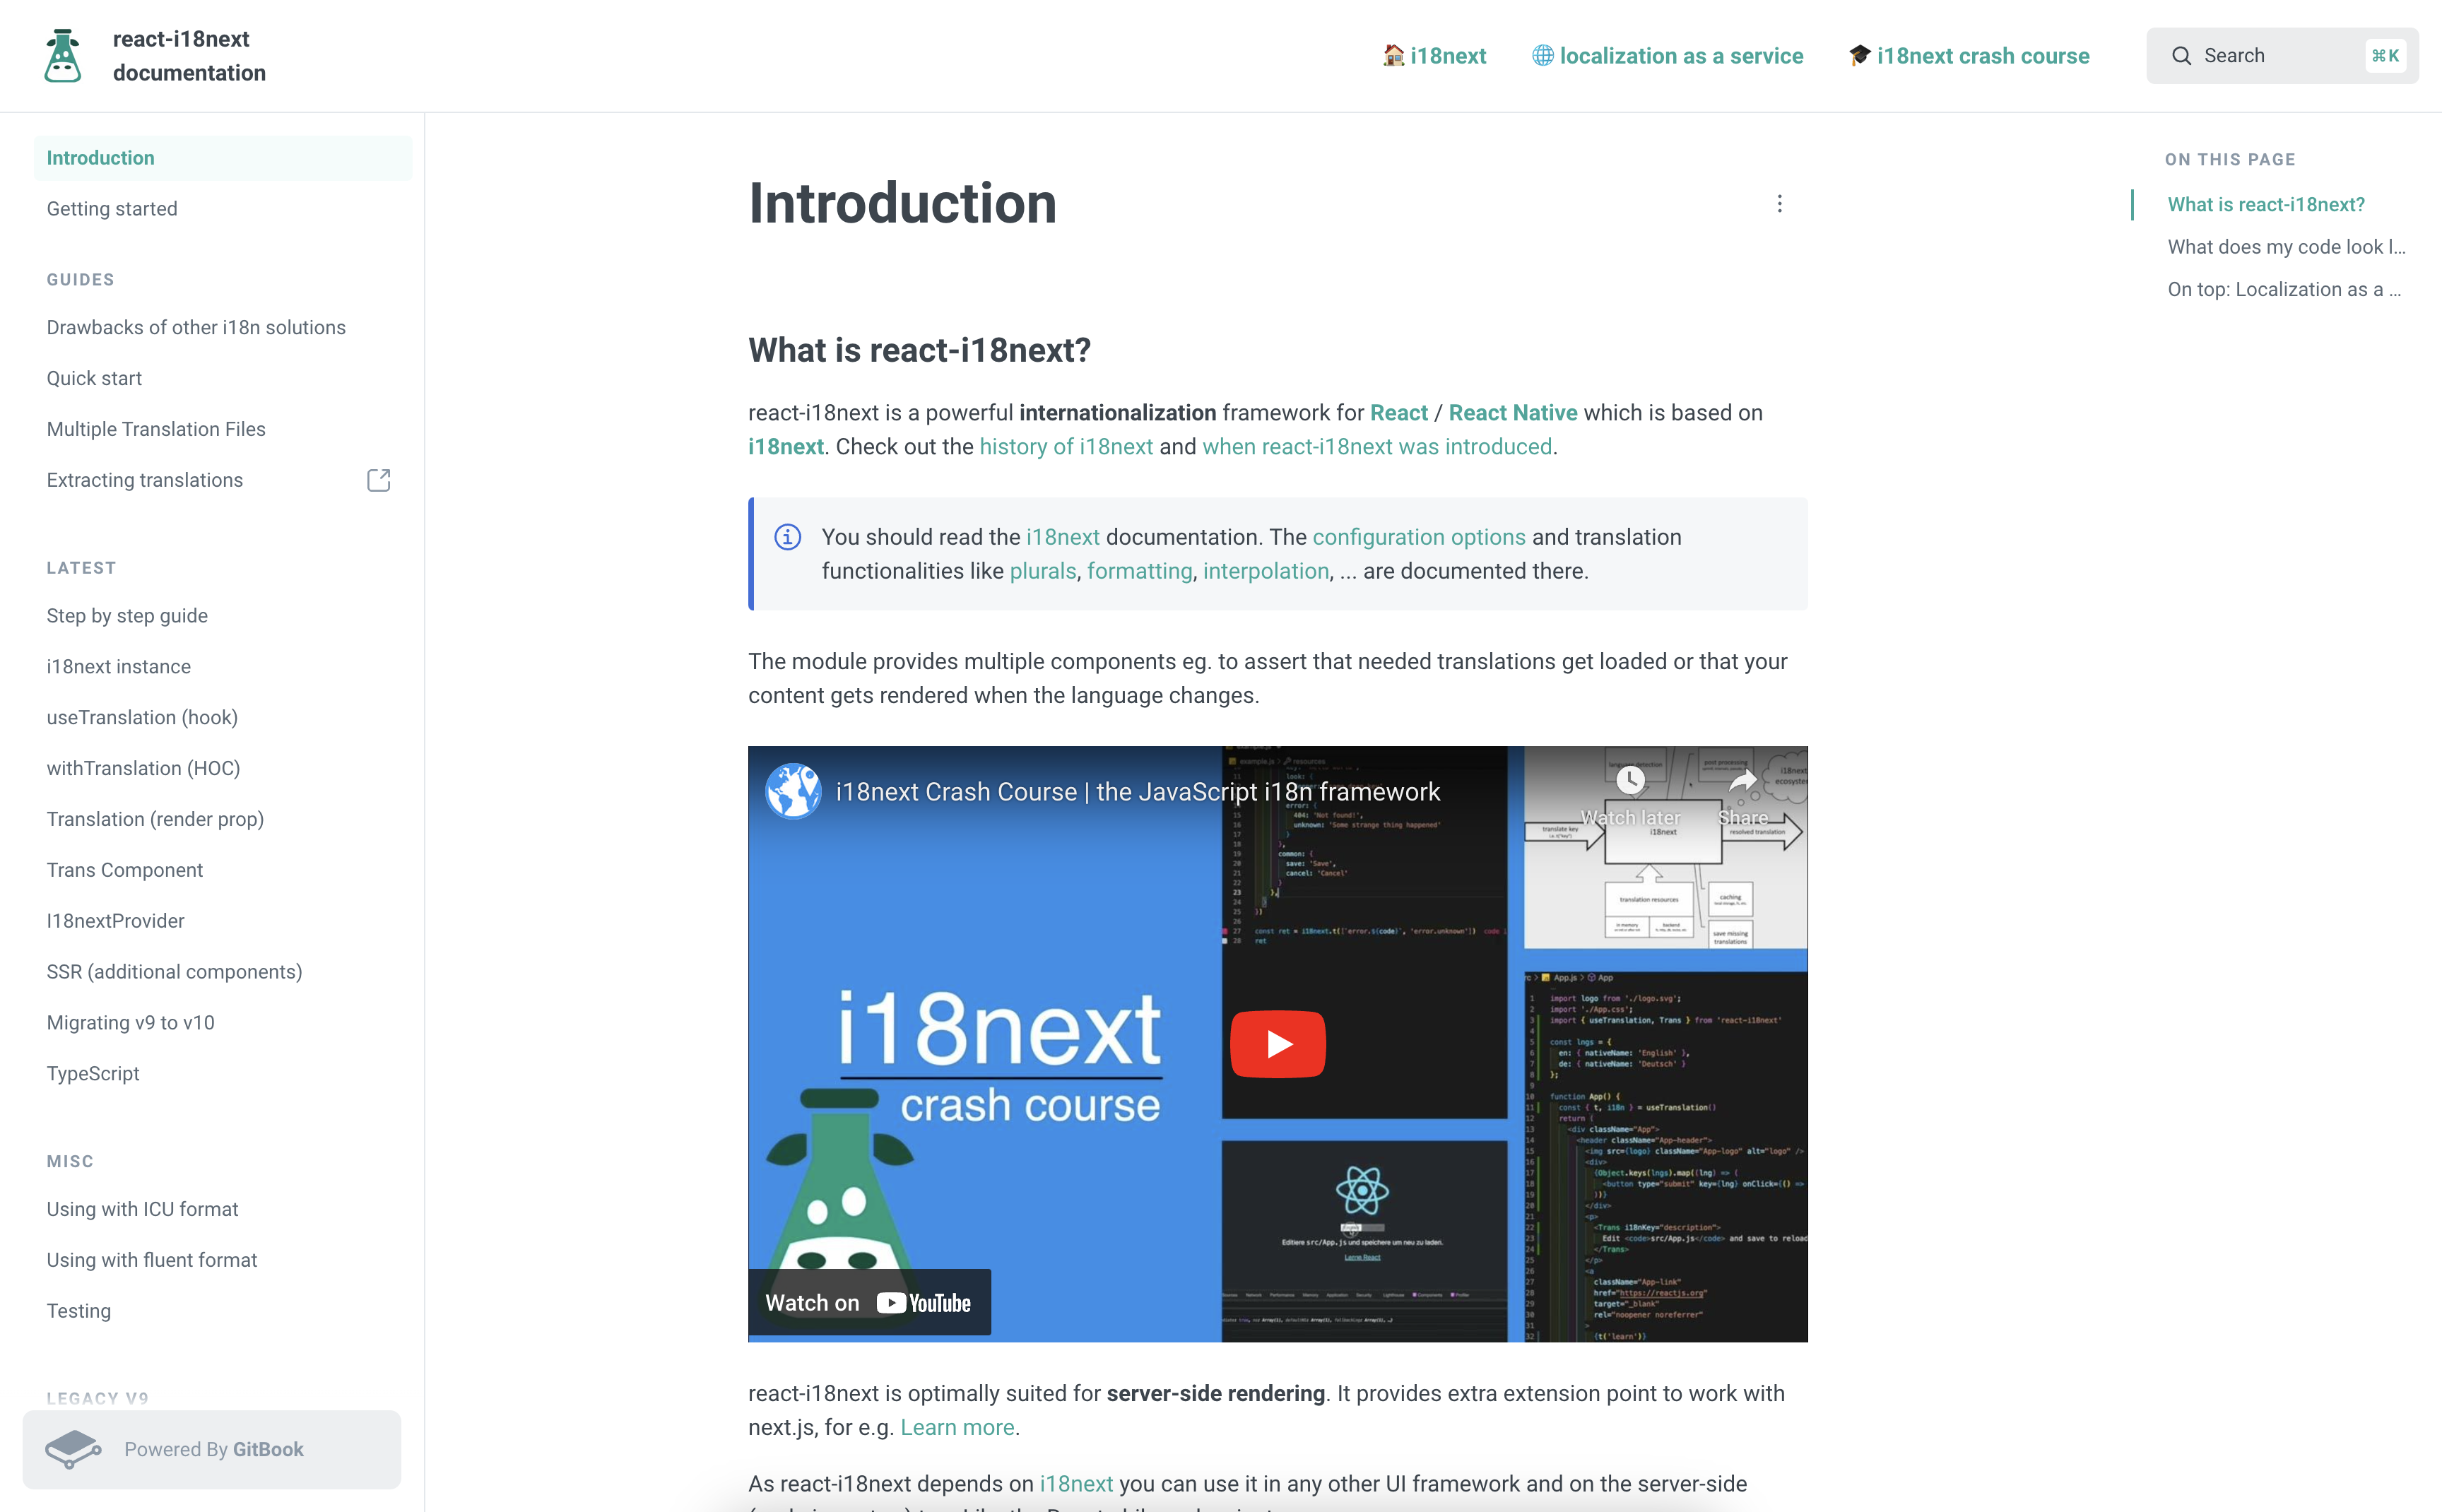 React-i18next documentation page